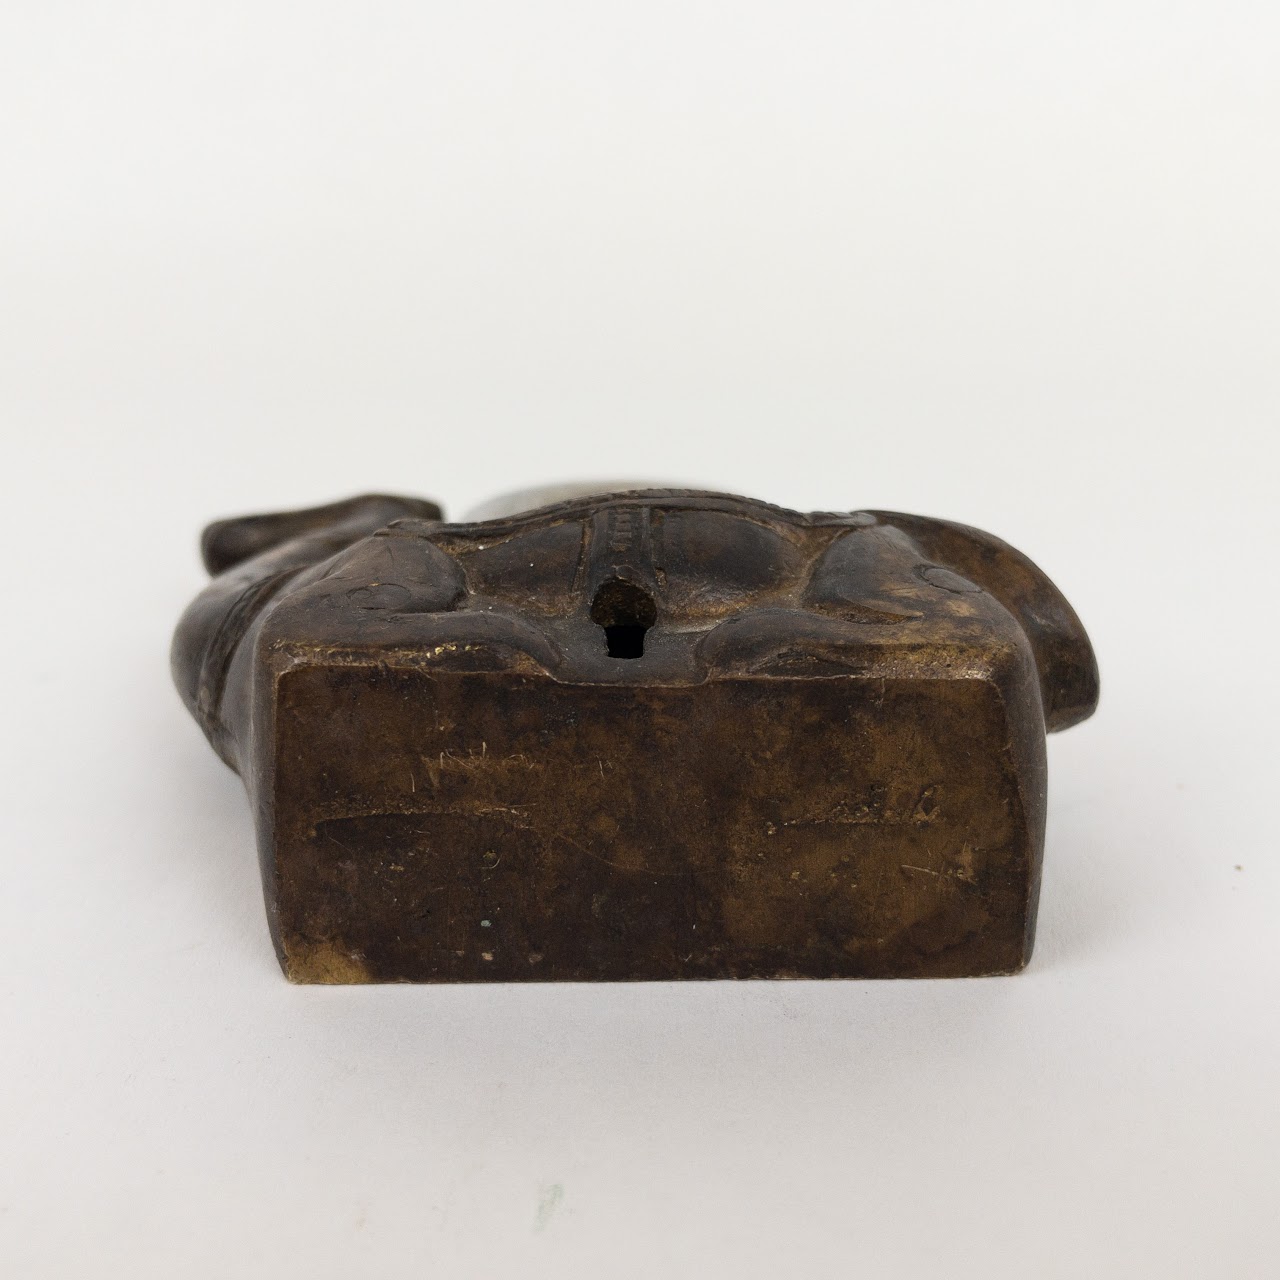 Vintage Brass & Steel Camel Lock